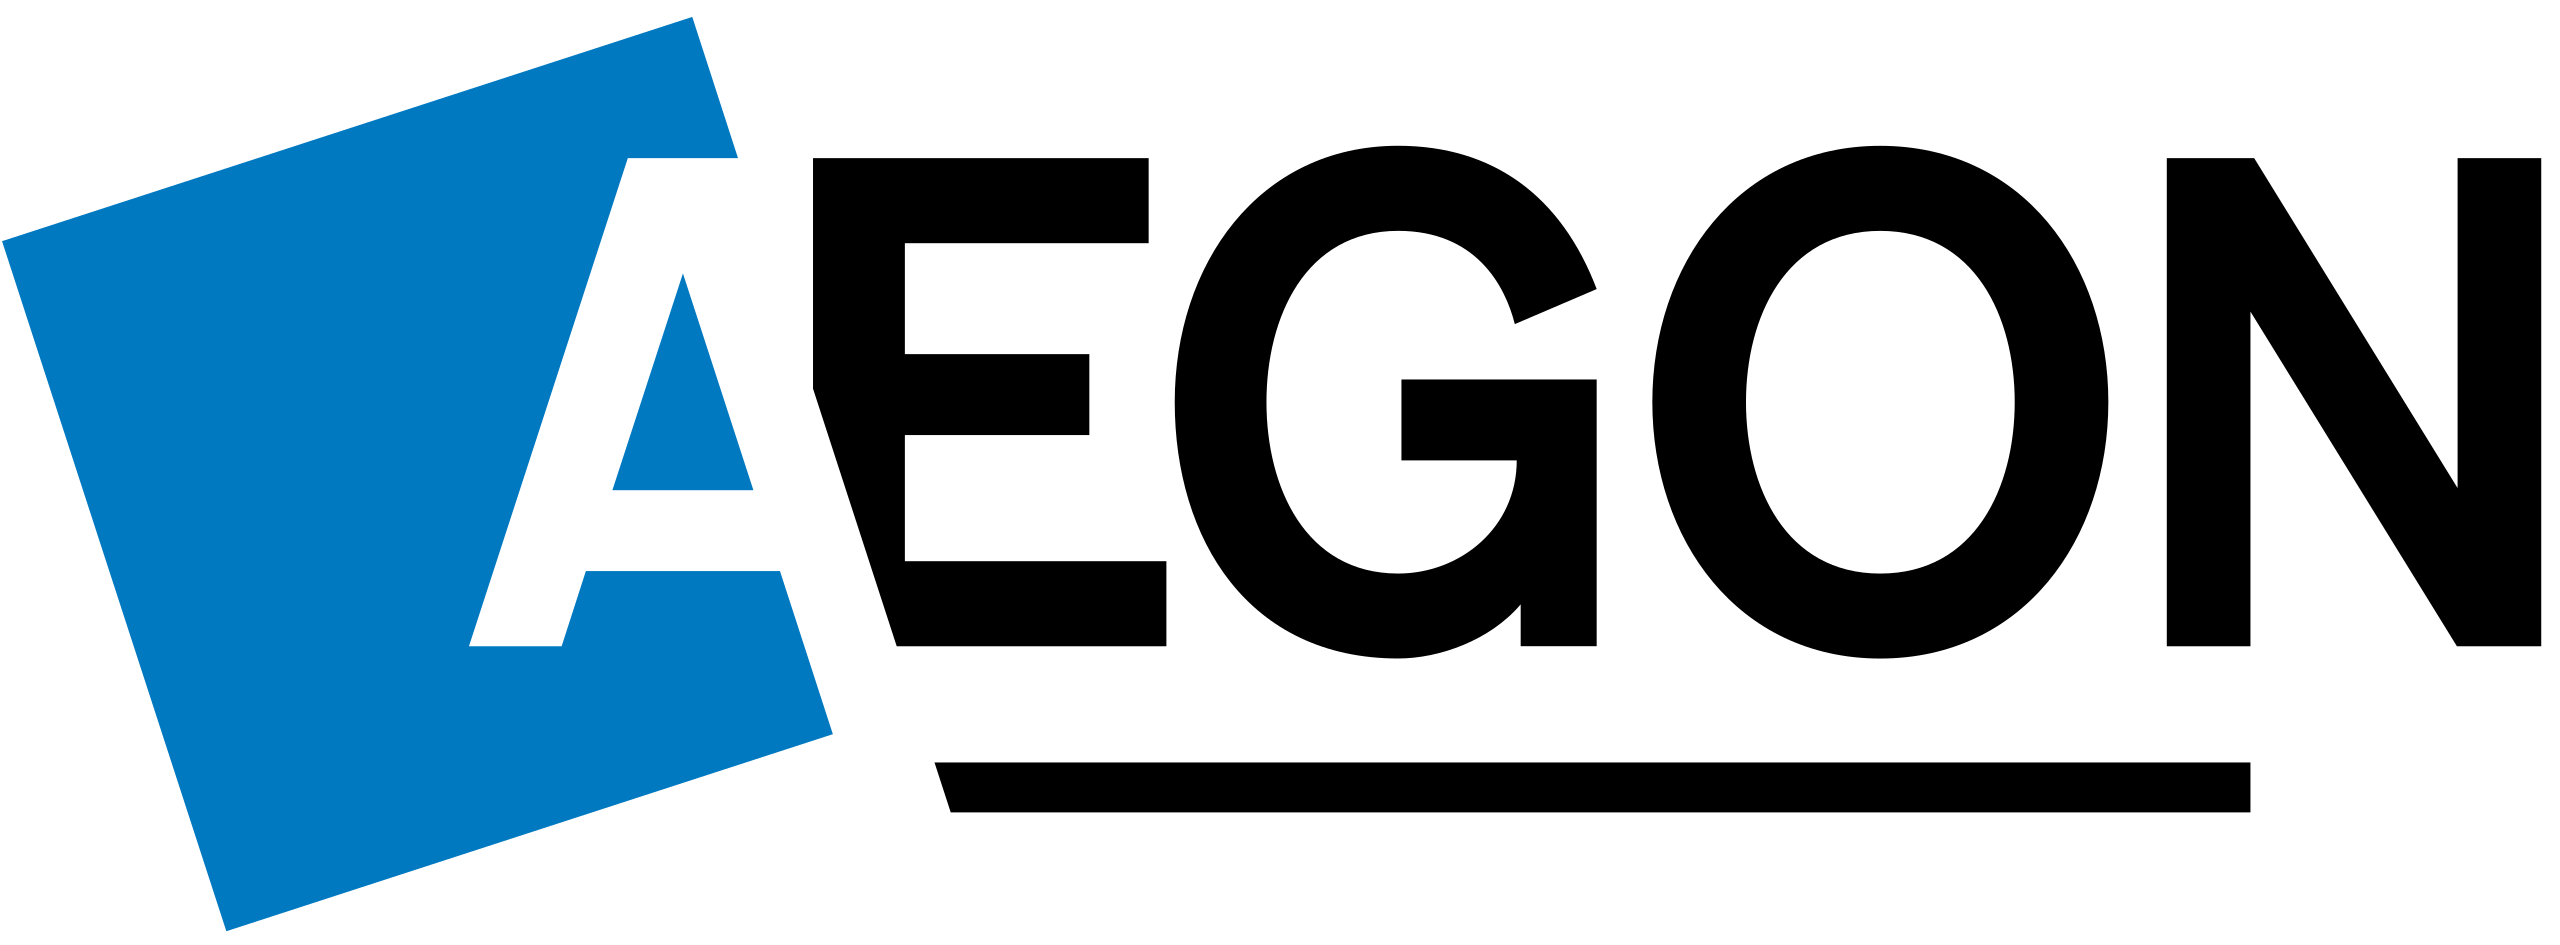 AEGON_(logo).svg